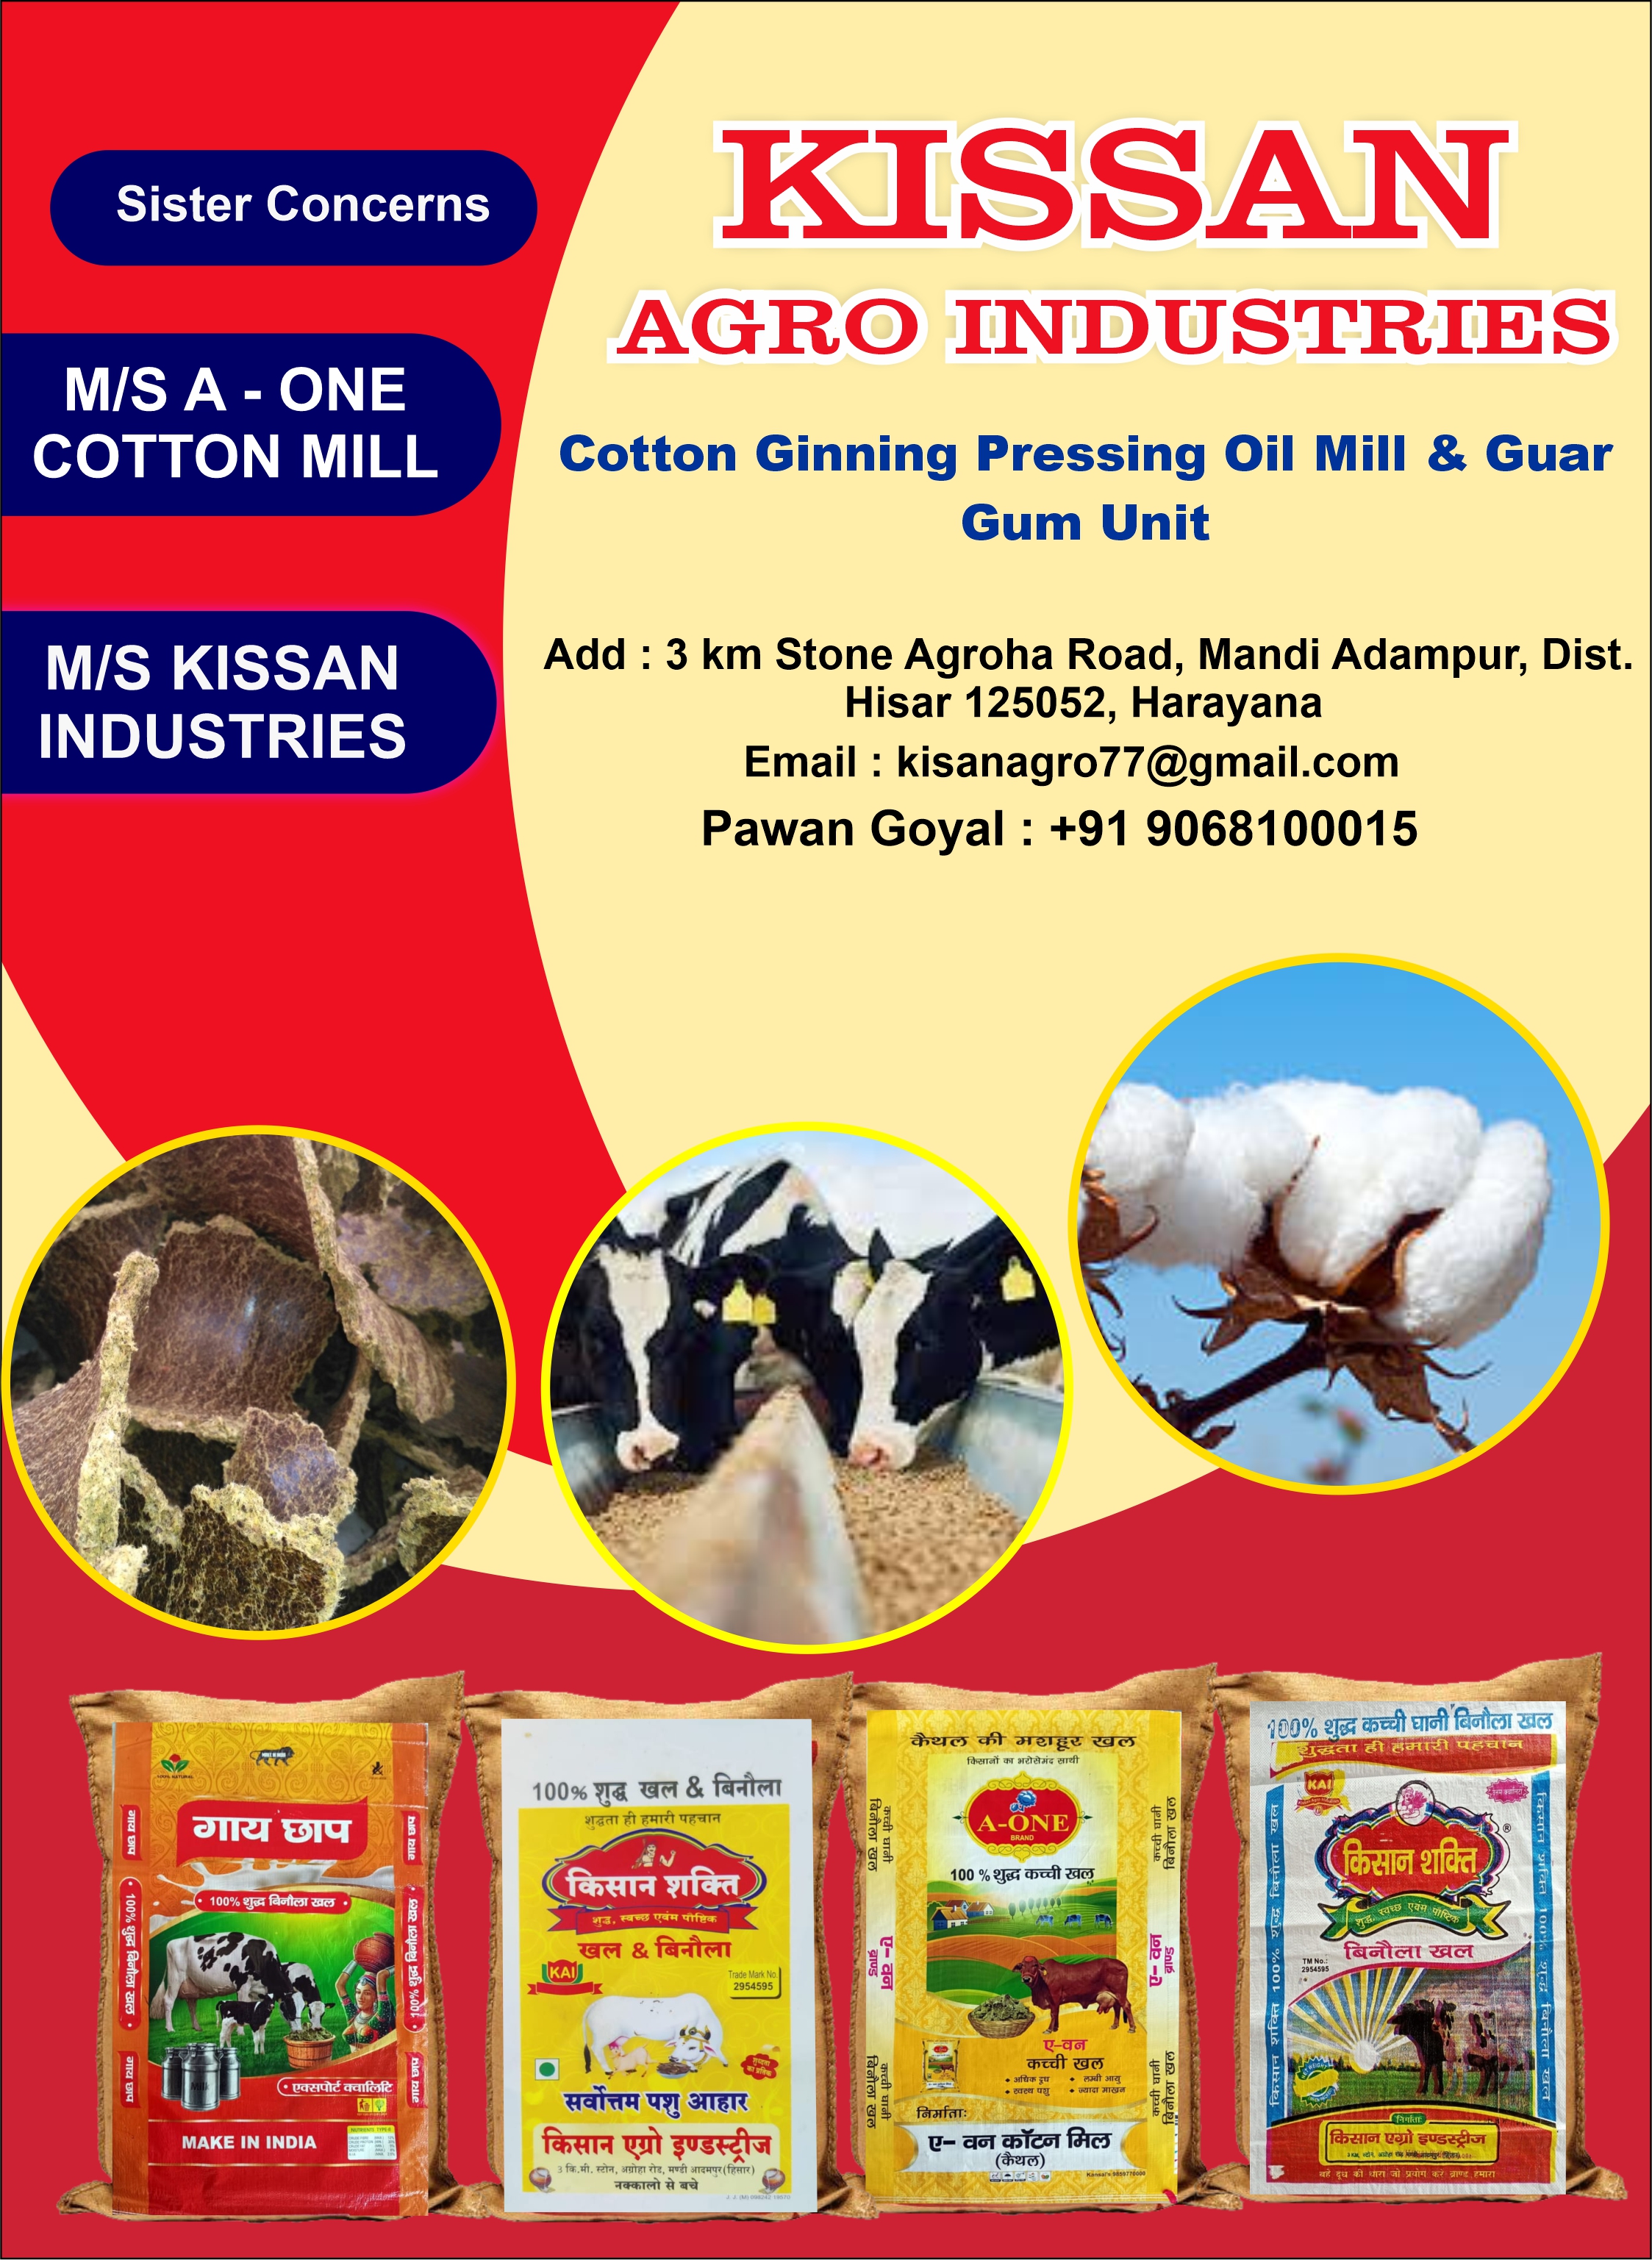 Kissan Agro Industries